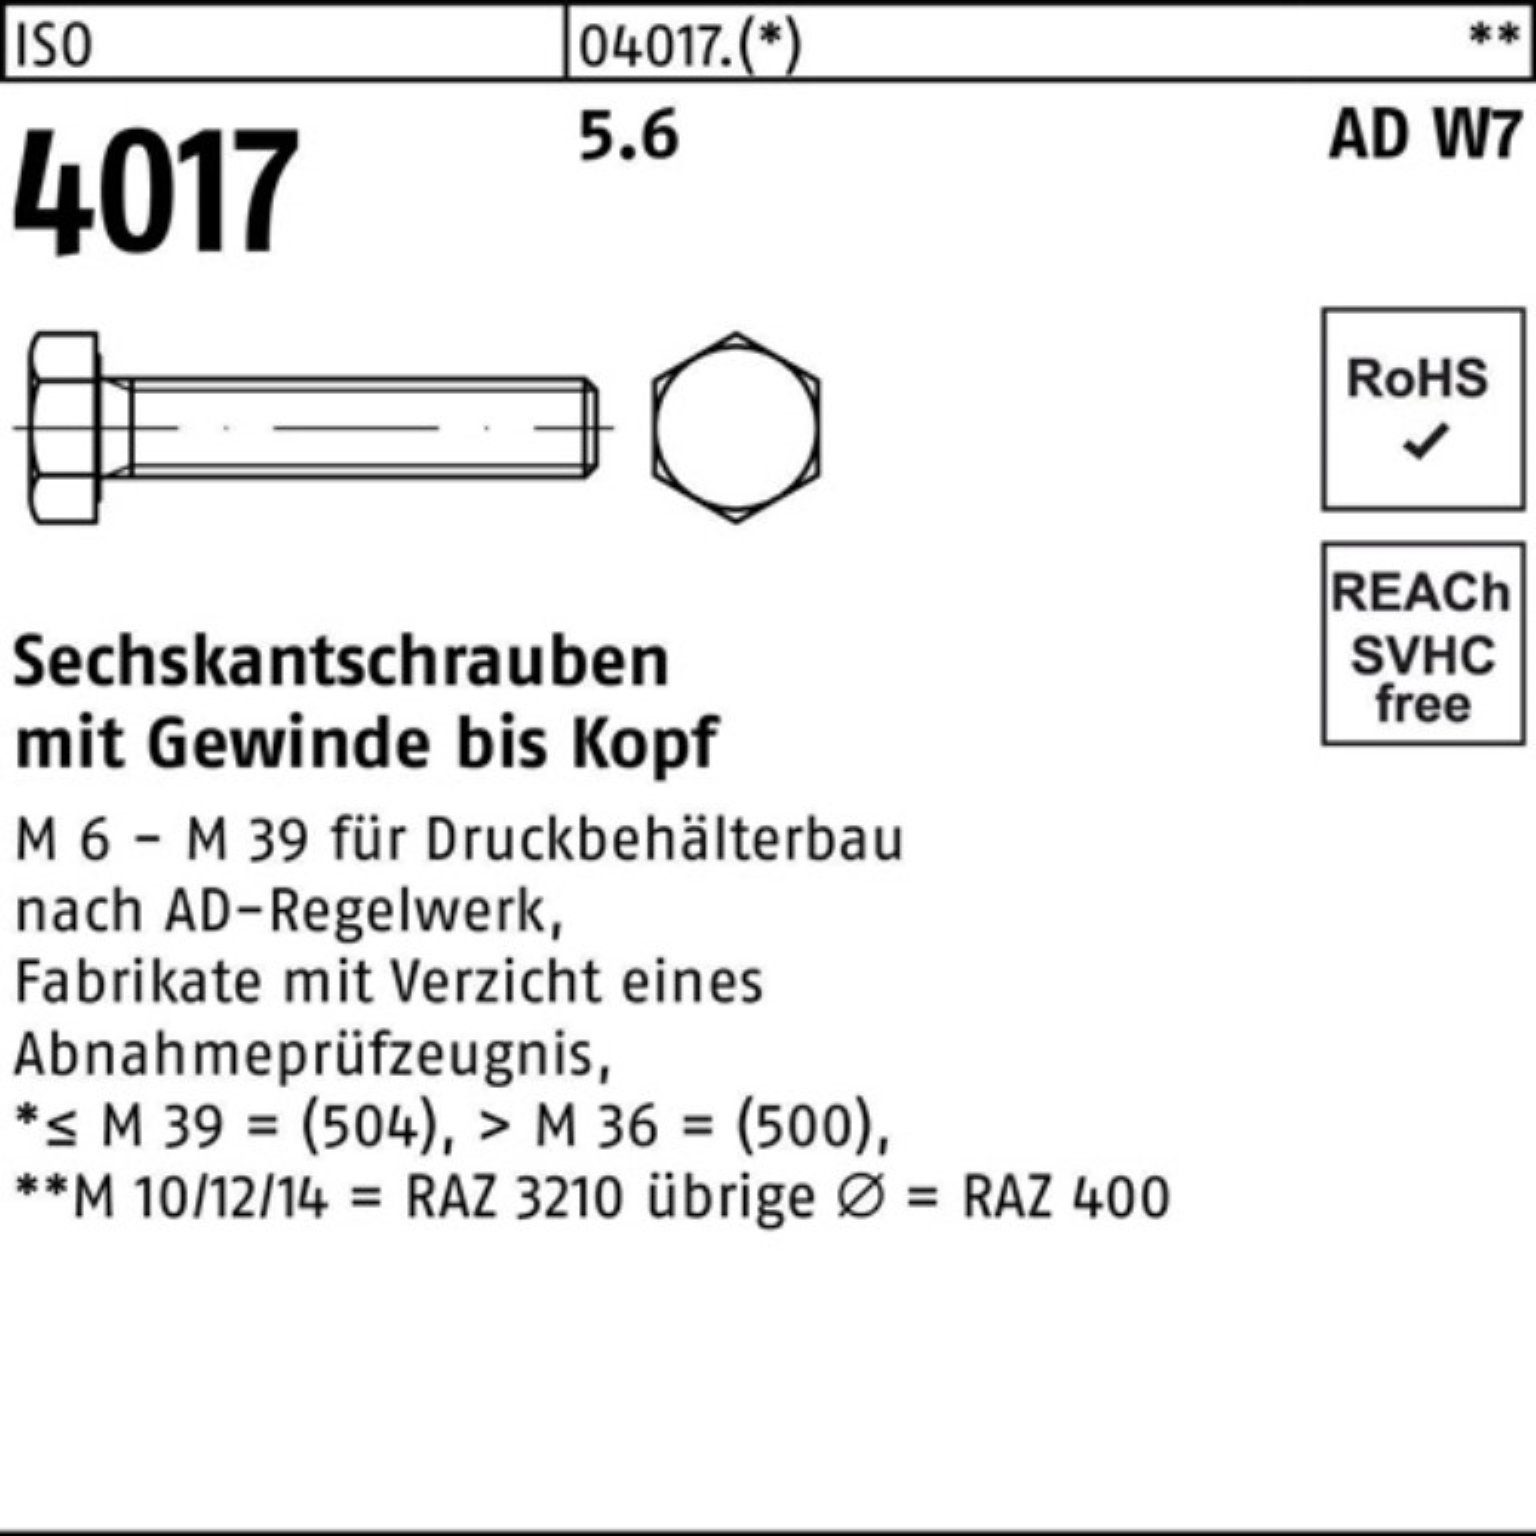 4017 I ISO 200er VG Sechskantschraube W7 5.6 35 200 Pack Stück AD Sechskantschraube Bufab M8x